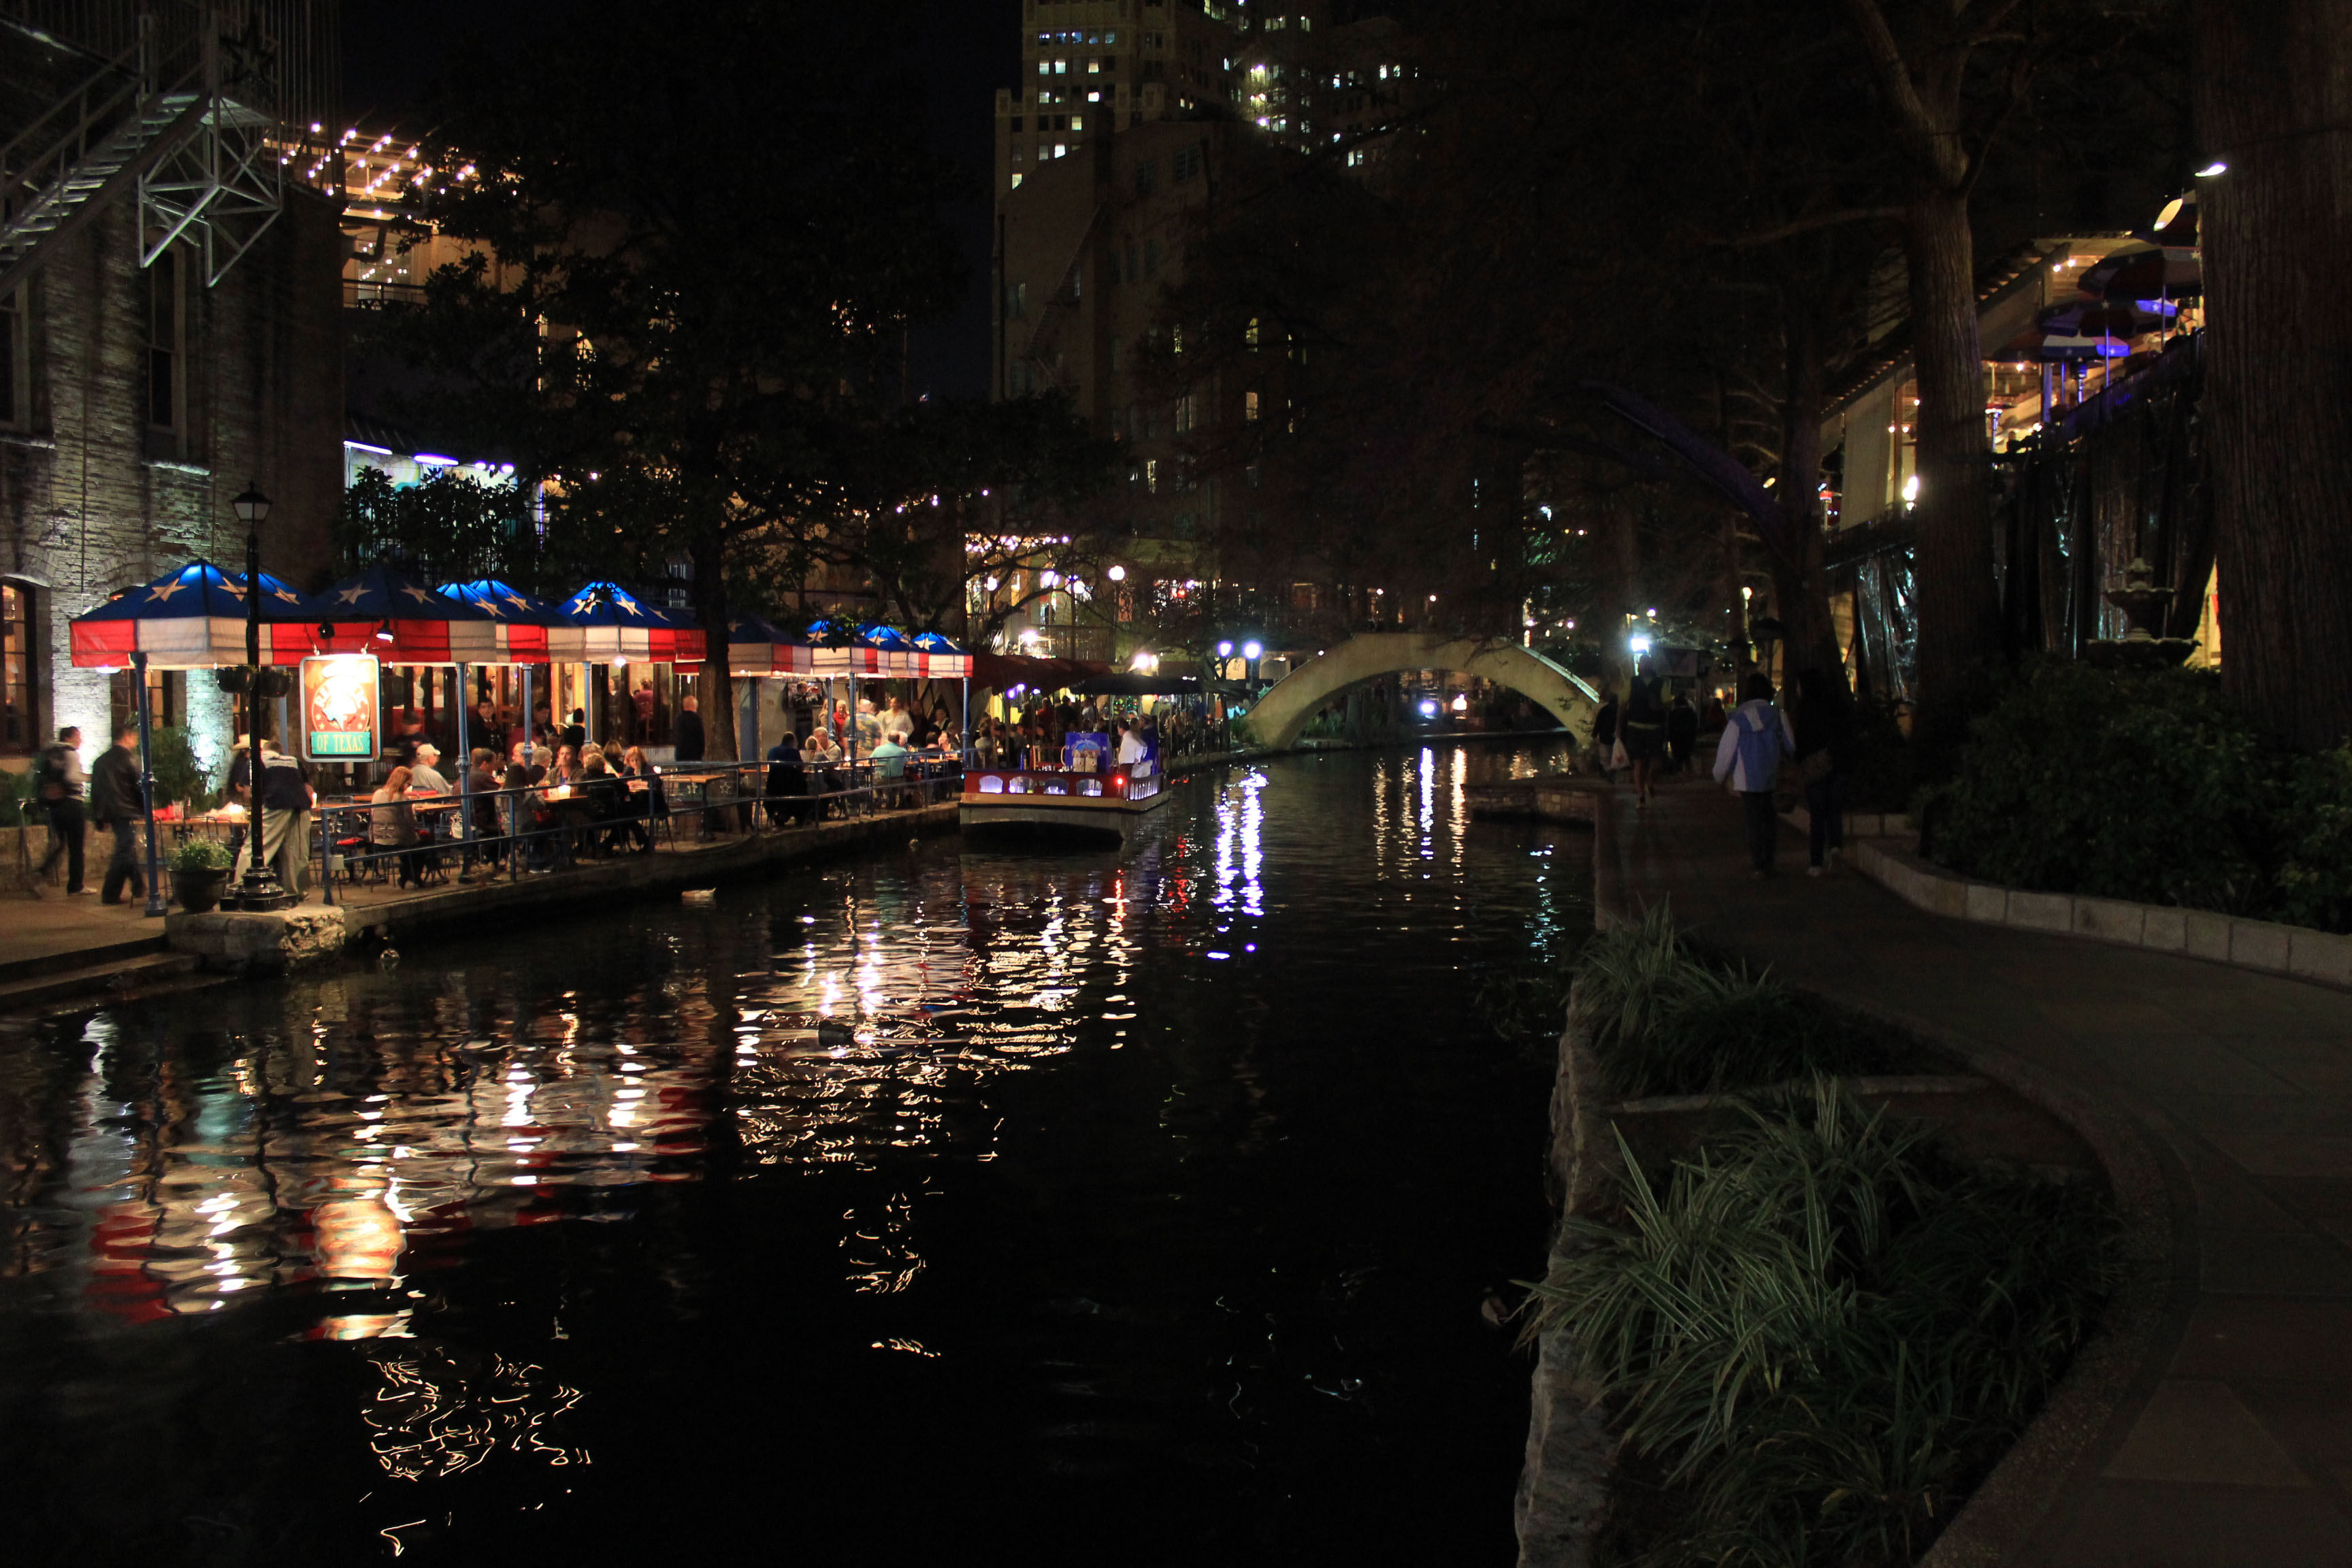 Riverwalk at Night in San Antonio, Texas image - Free stock photo - Public  Domain photo - CC0 Images